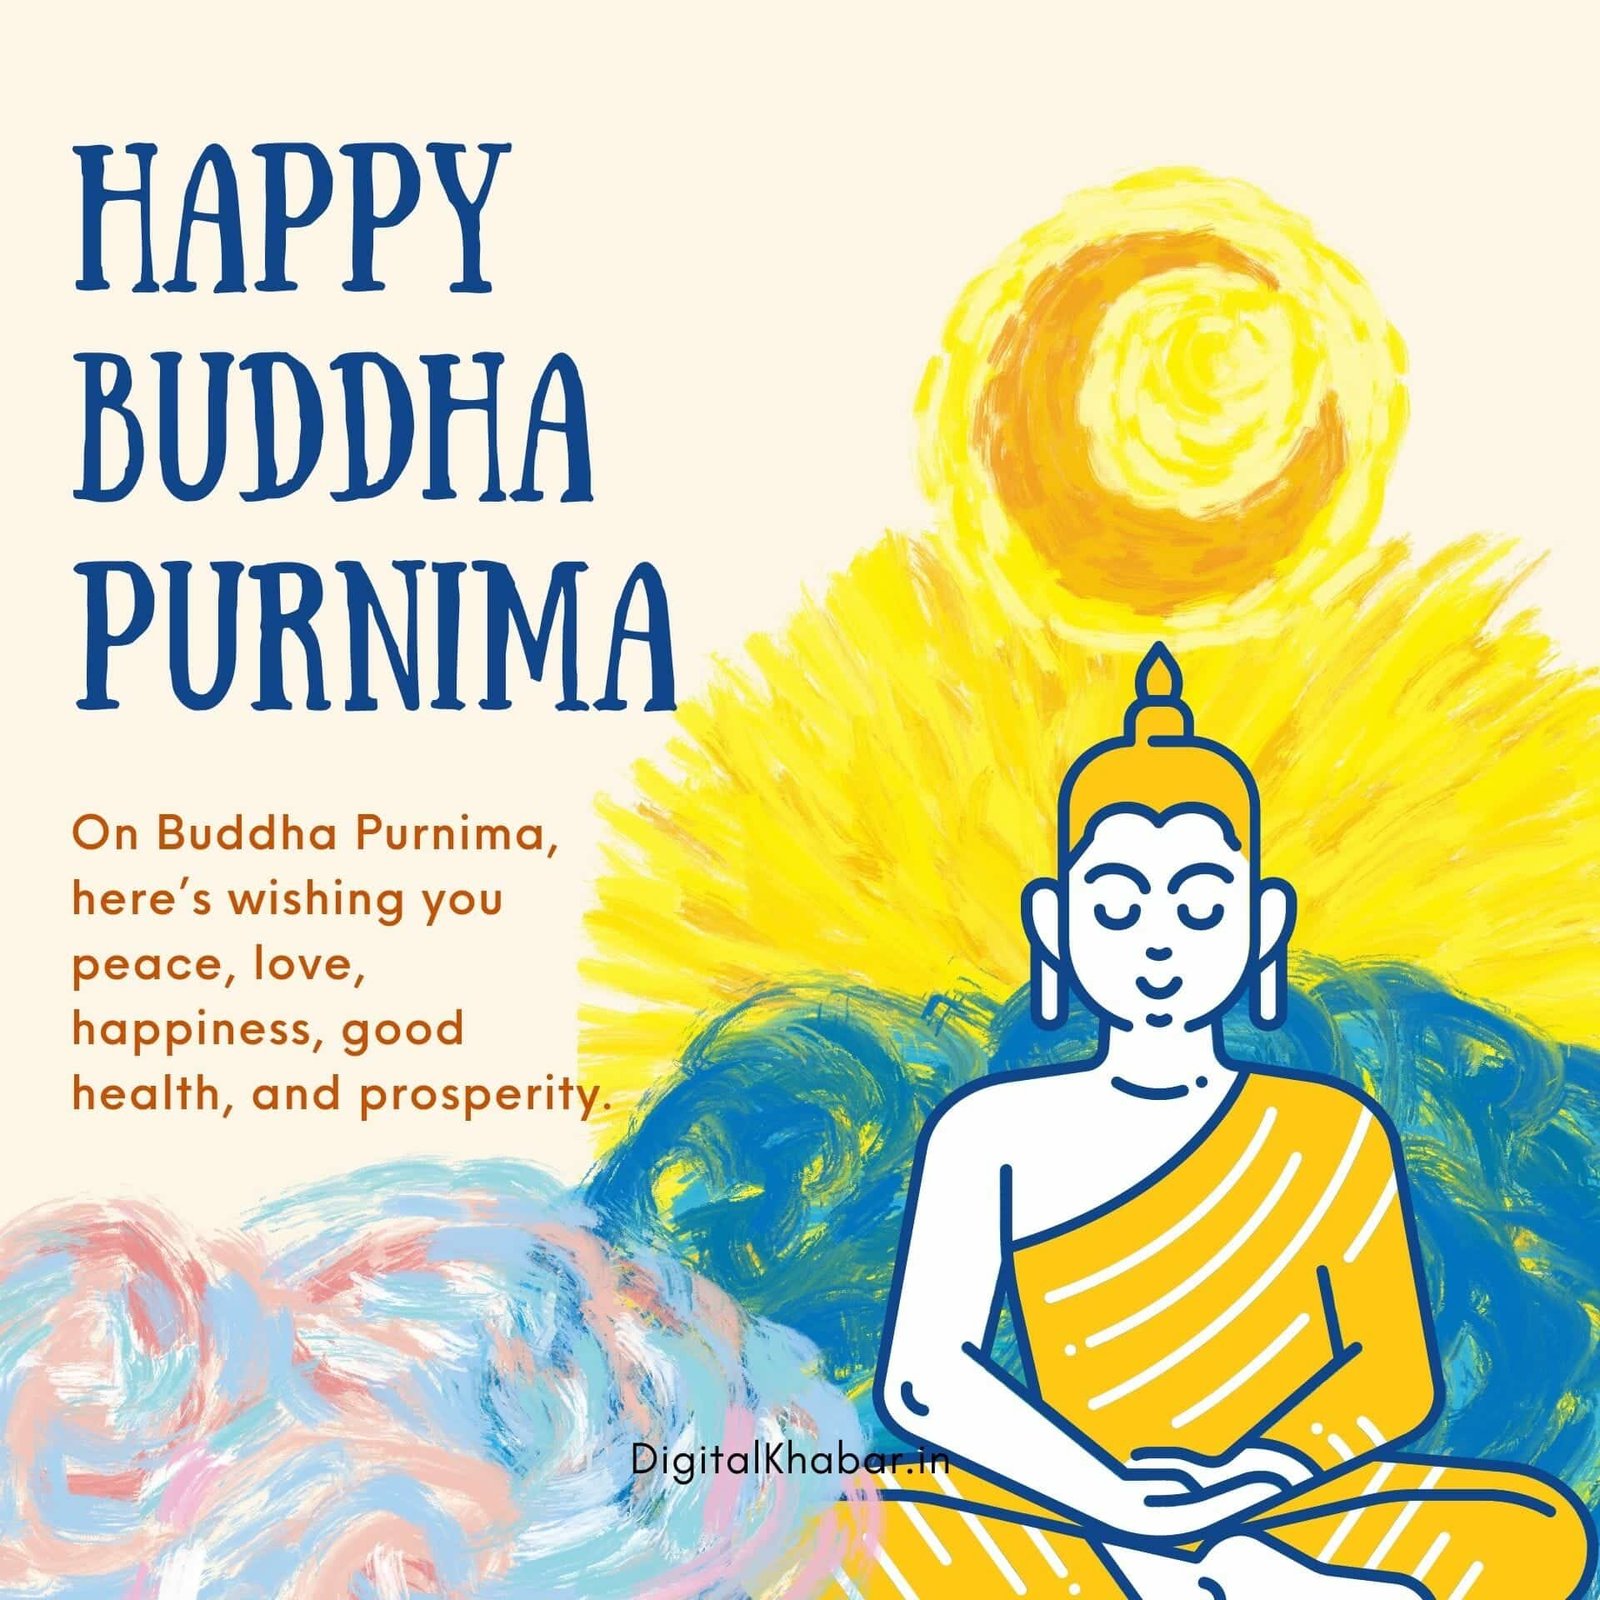 lord buddha purnima images